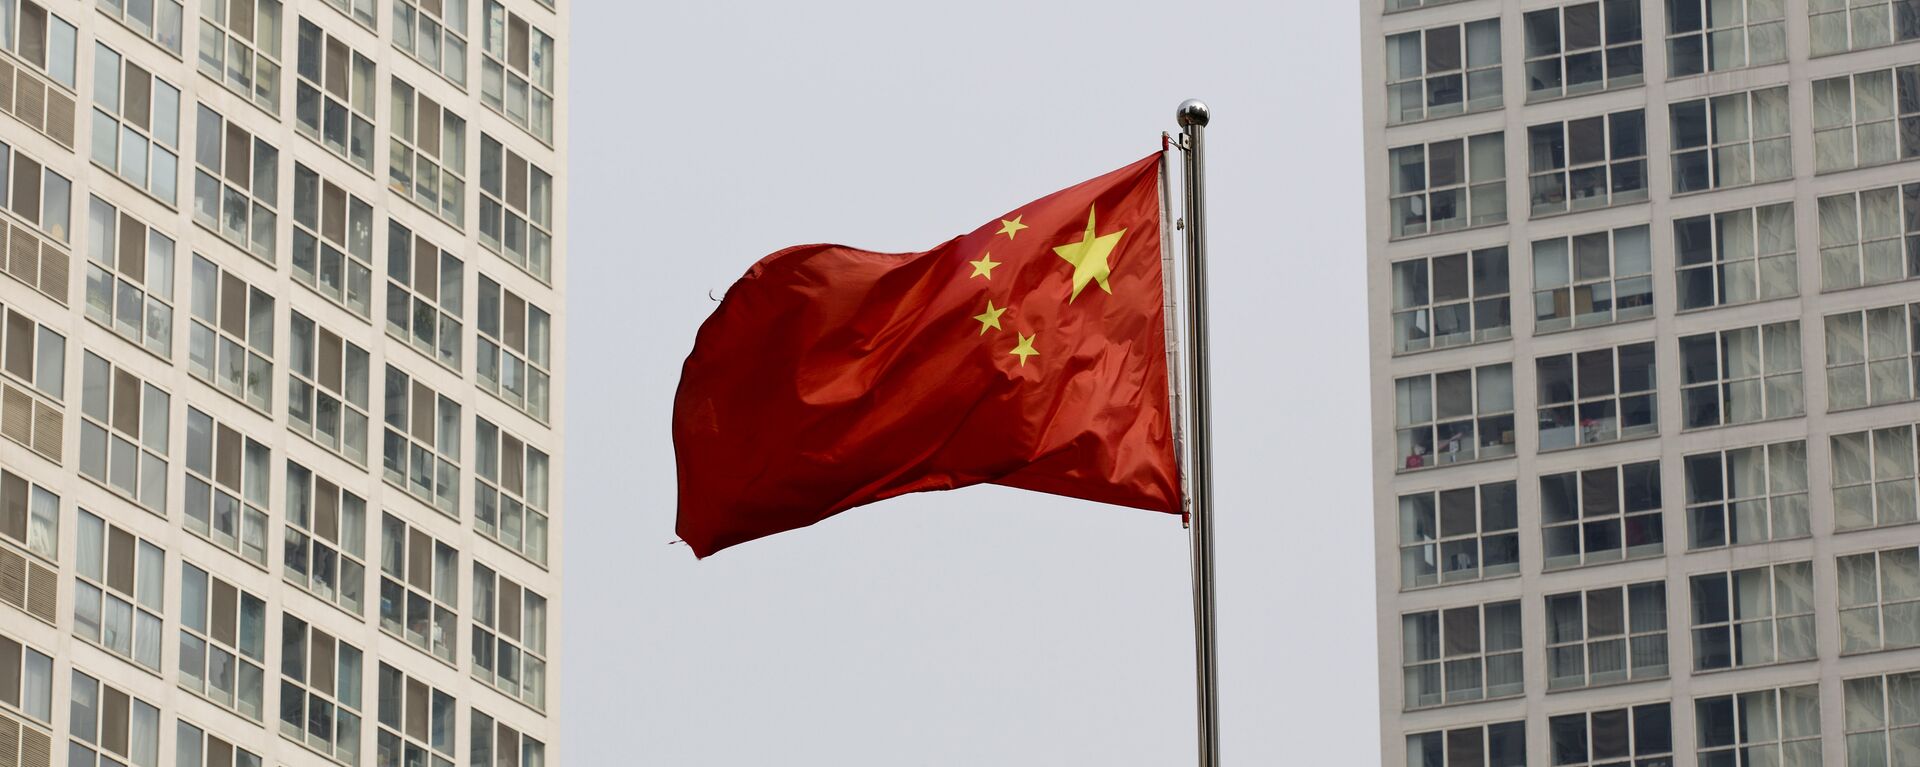 La bandera de China - Sputnik Mundo, 1920, 22.03.2021